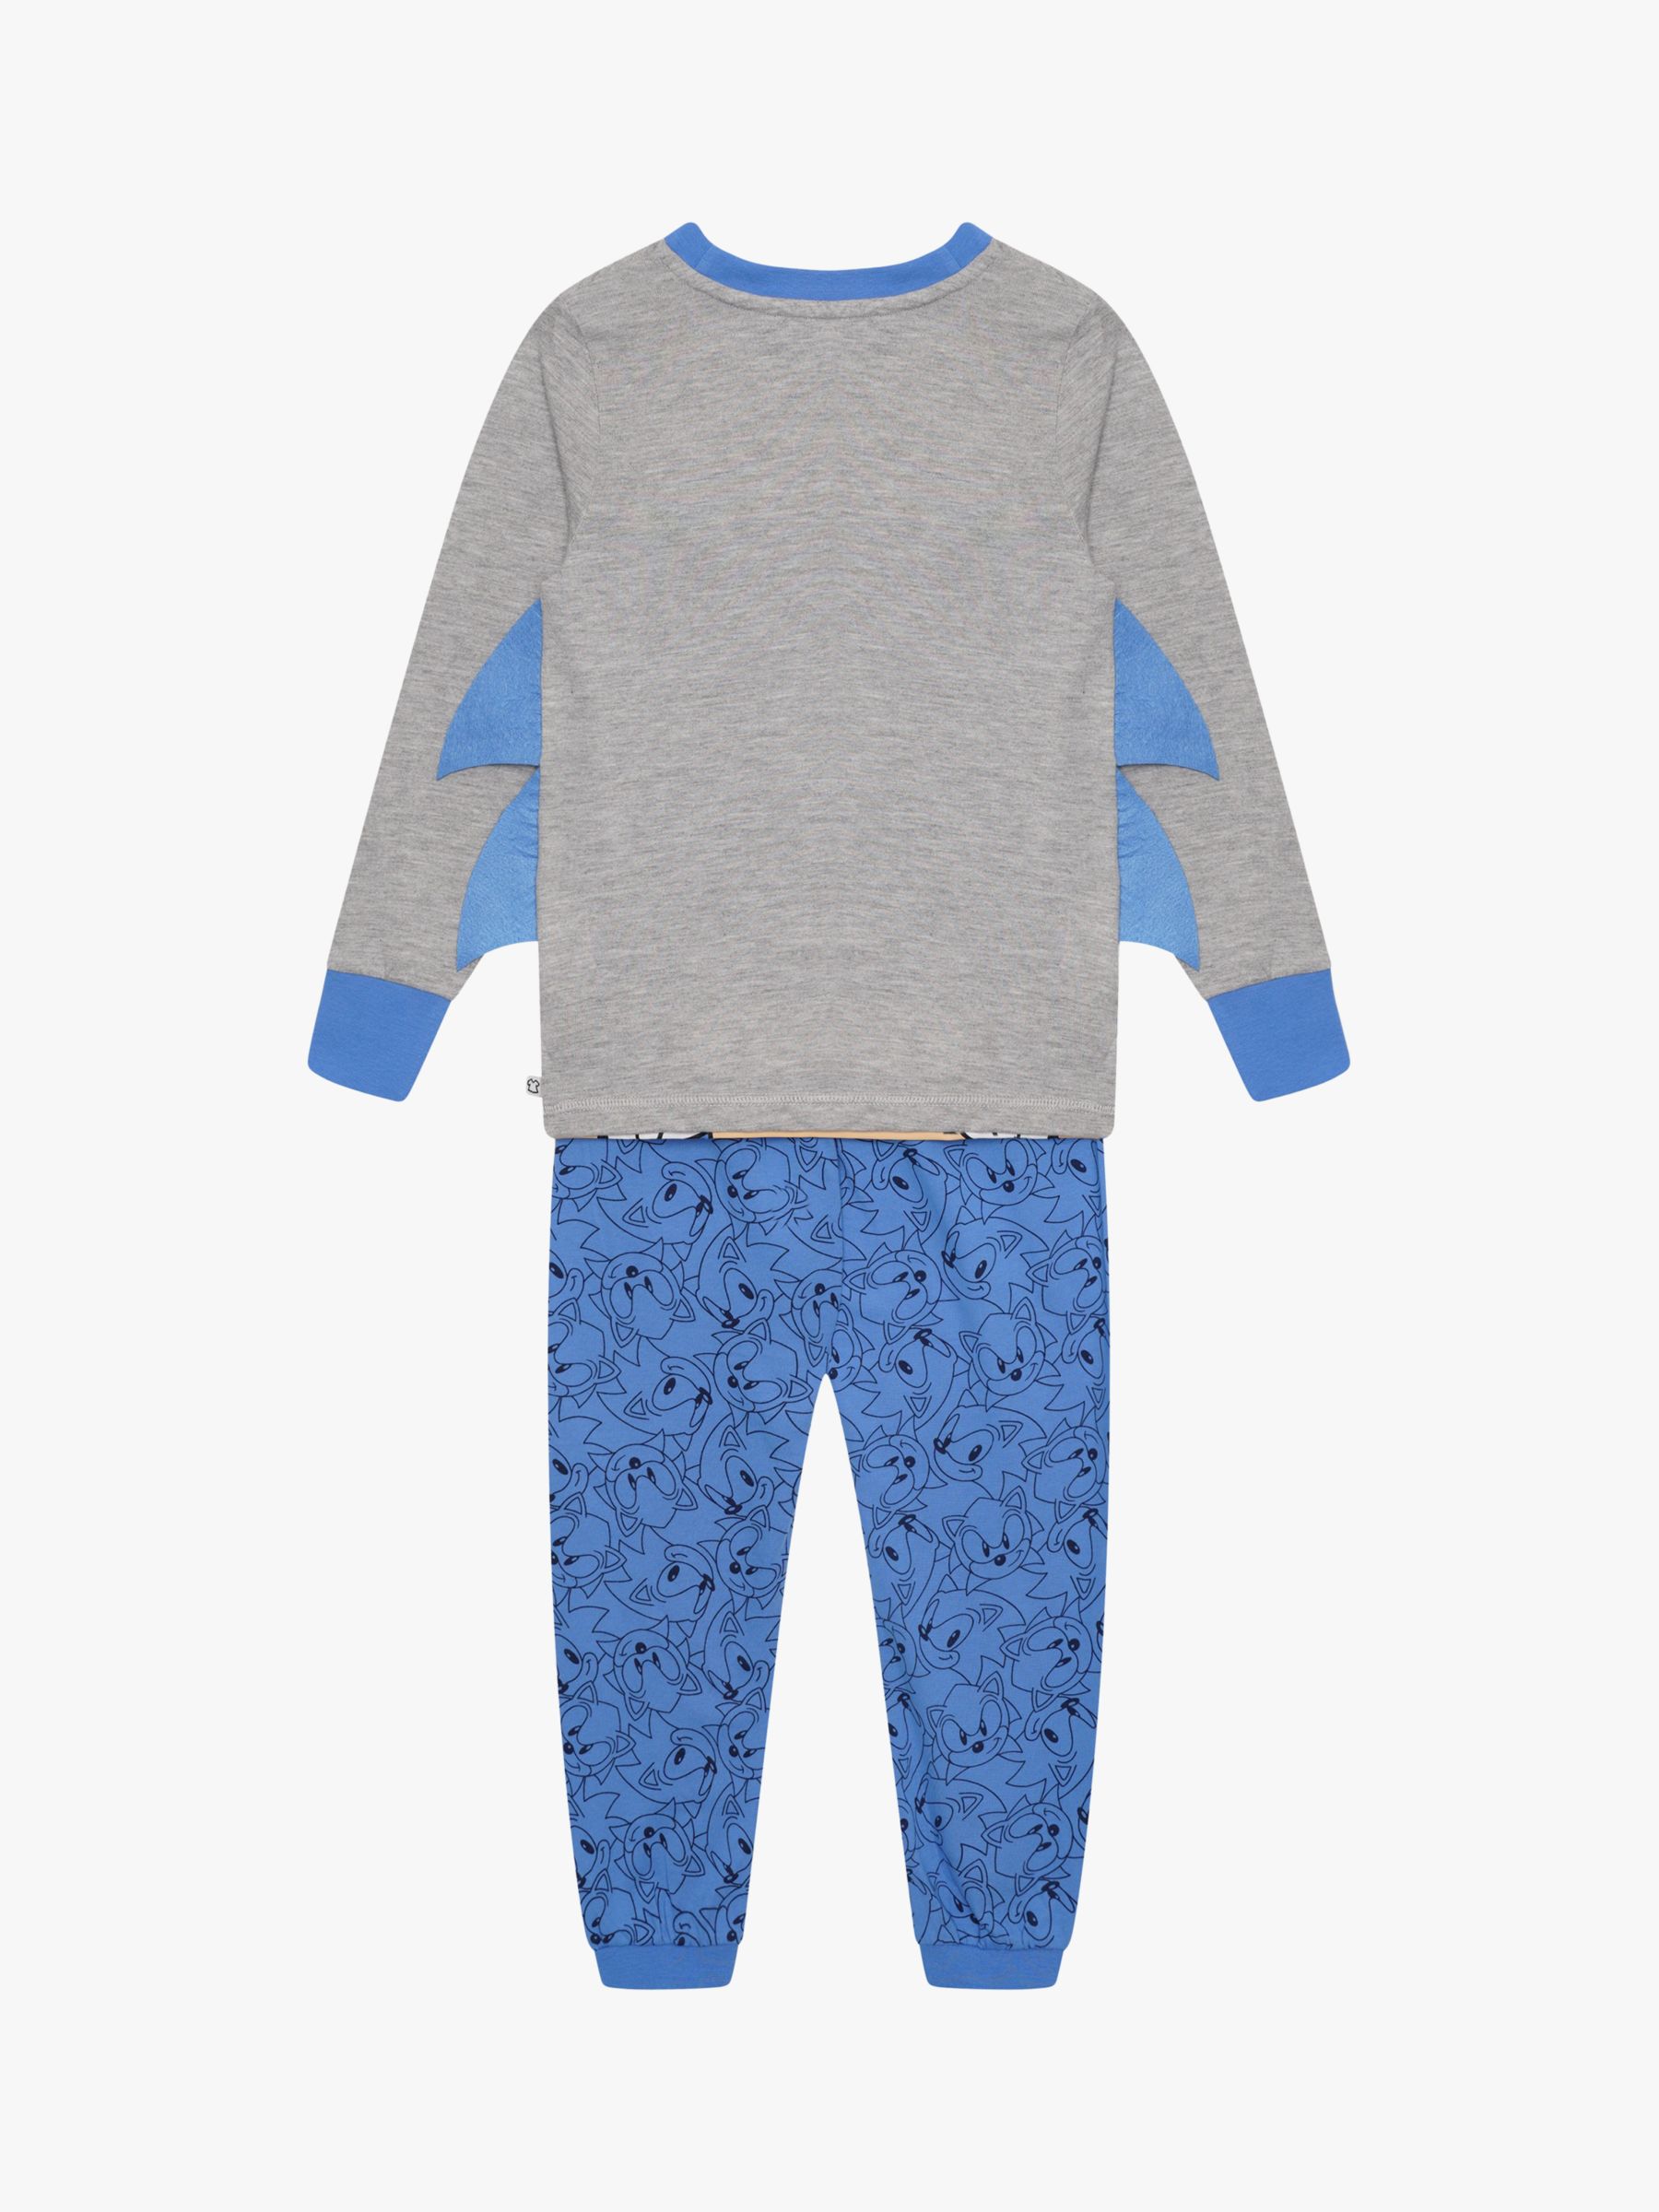 Buy Brand Threads Kids' Sonic the Hedgehog Pyjama Set, Blue Online at johnlewis.com